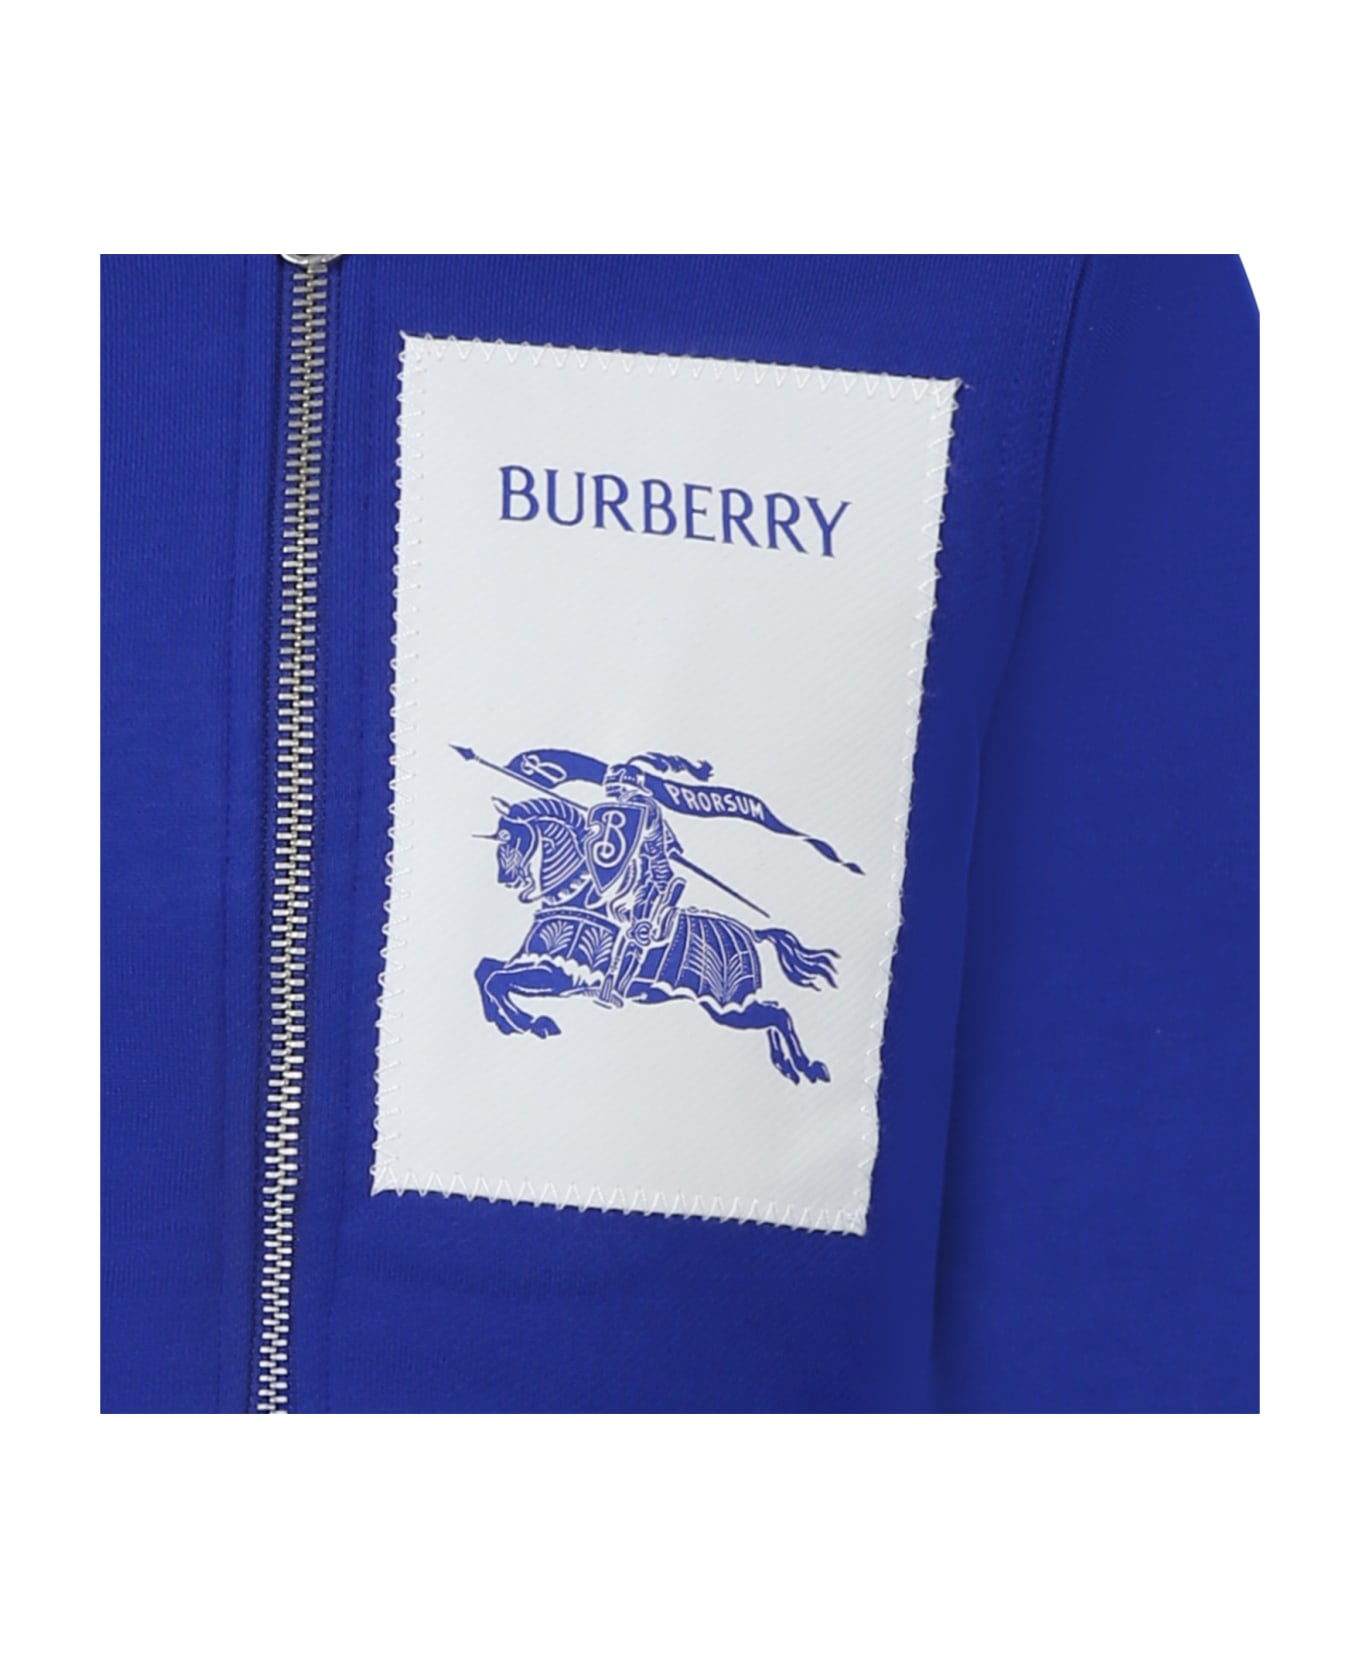 Burberry Sweatshirt For Boys With Logo - Knight